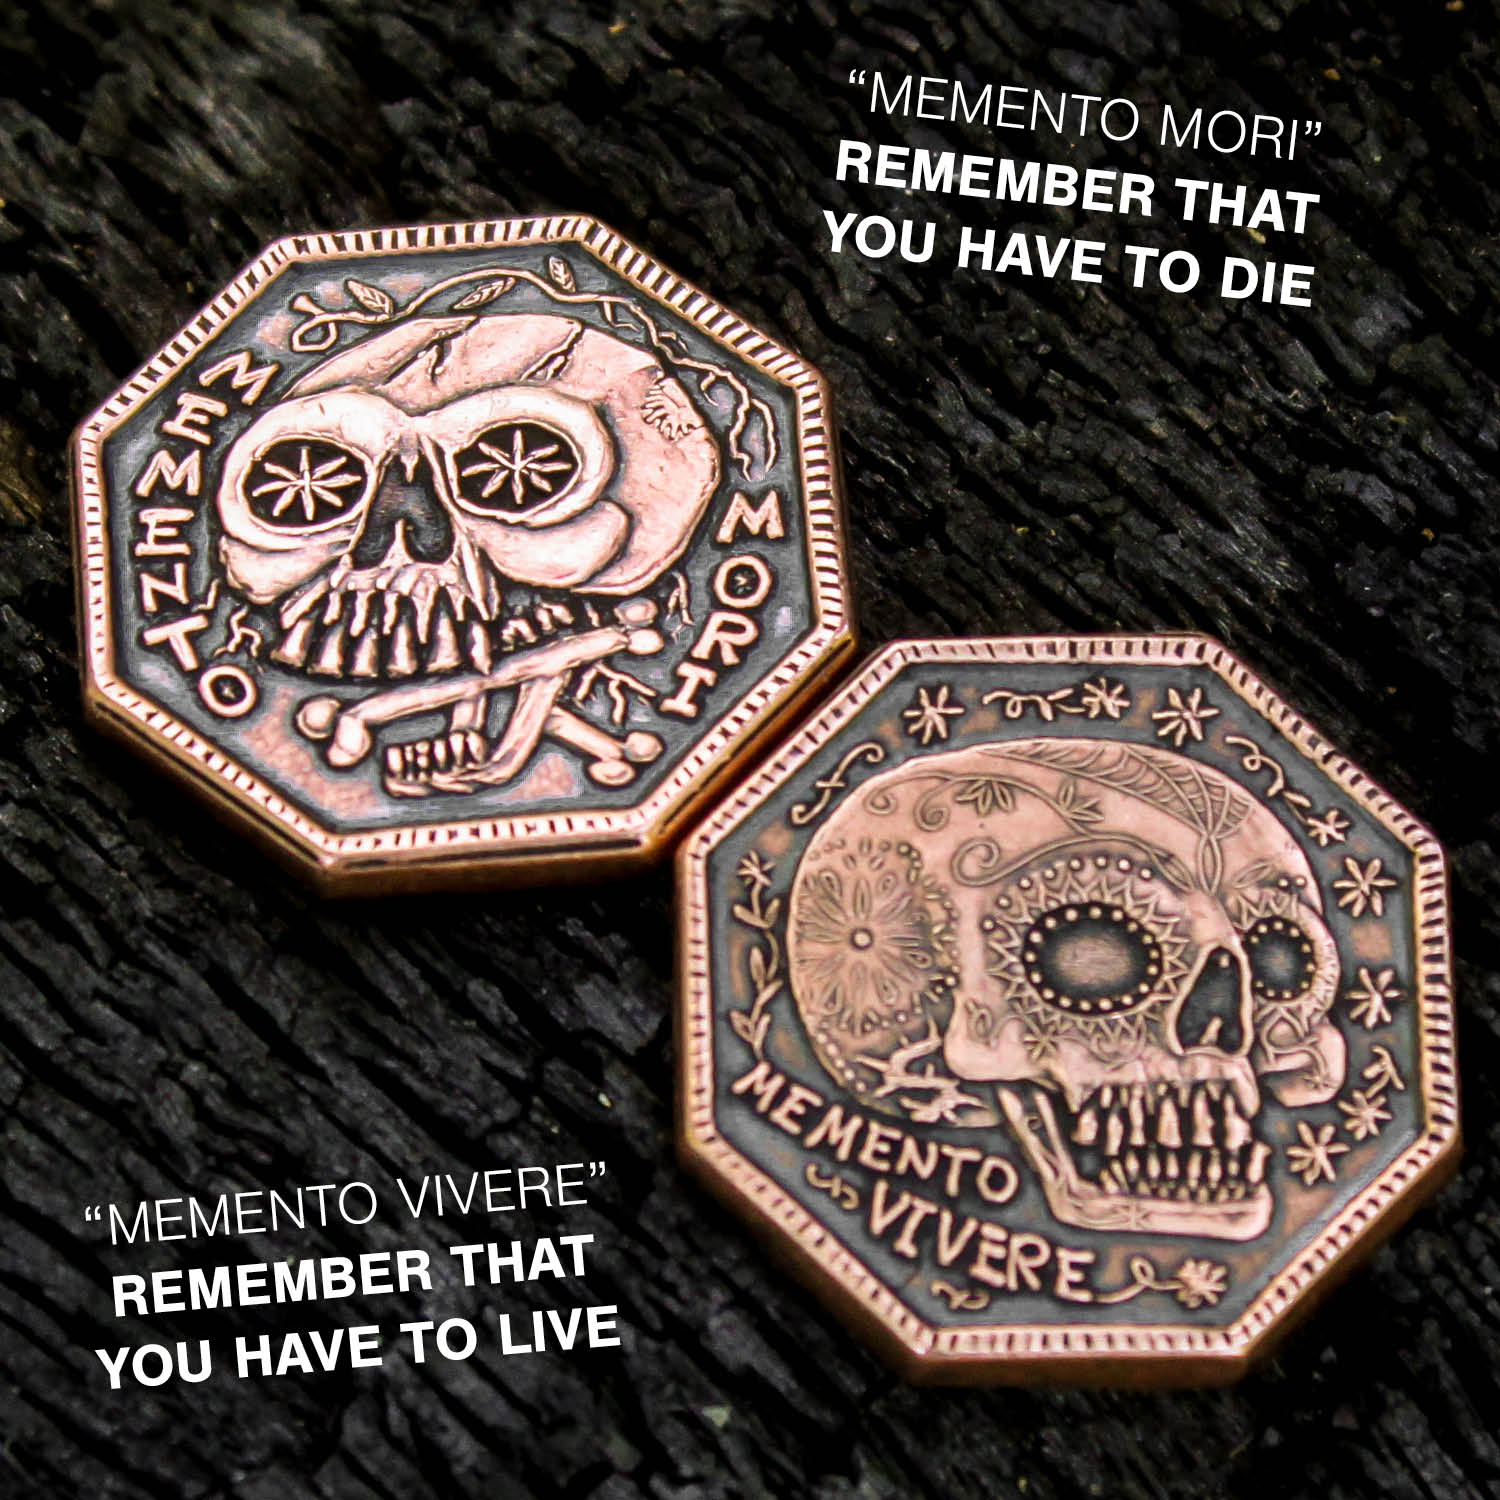 Memento Mori / Memento Vivere Reminder Coin | Shire Post Mint Gifts